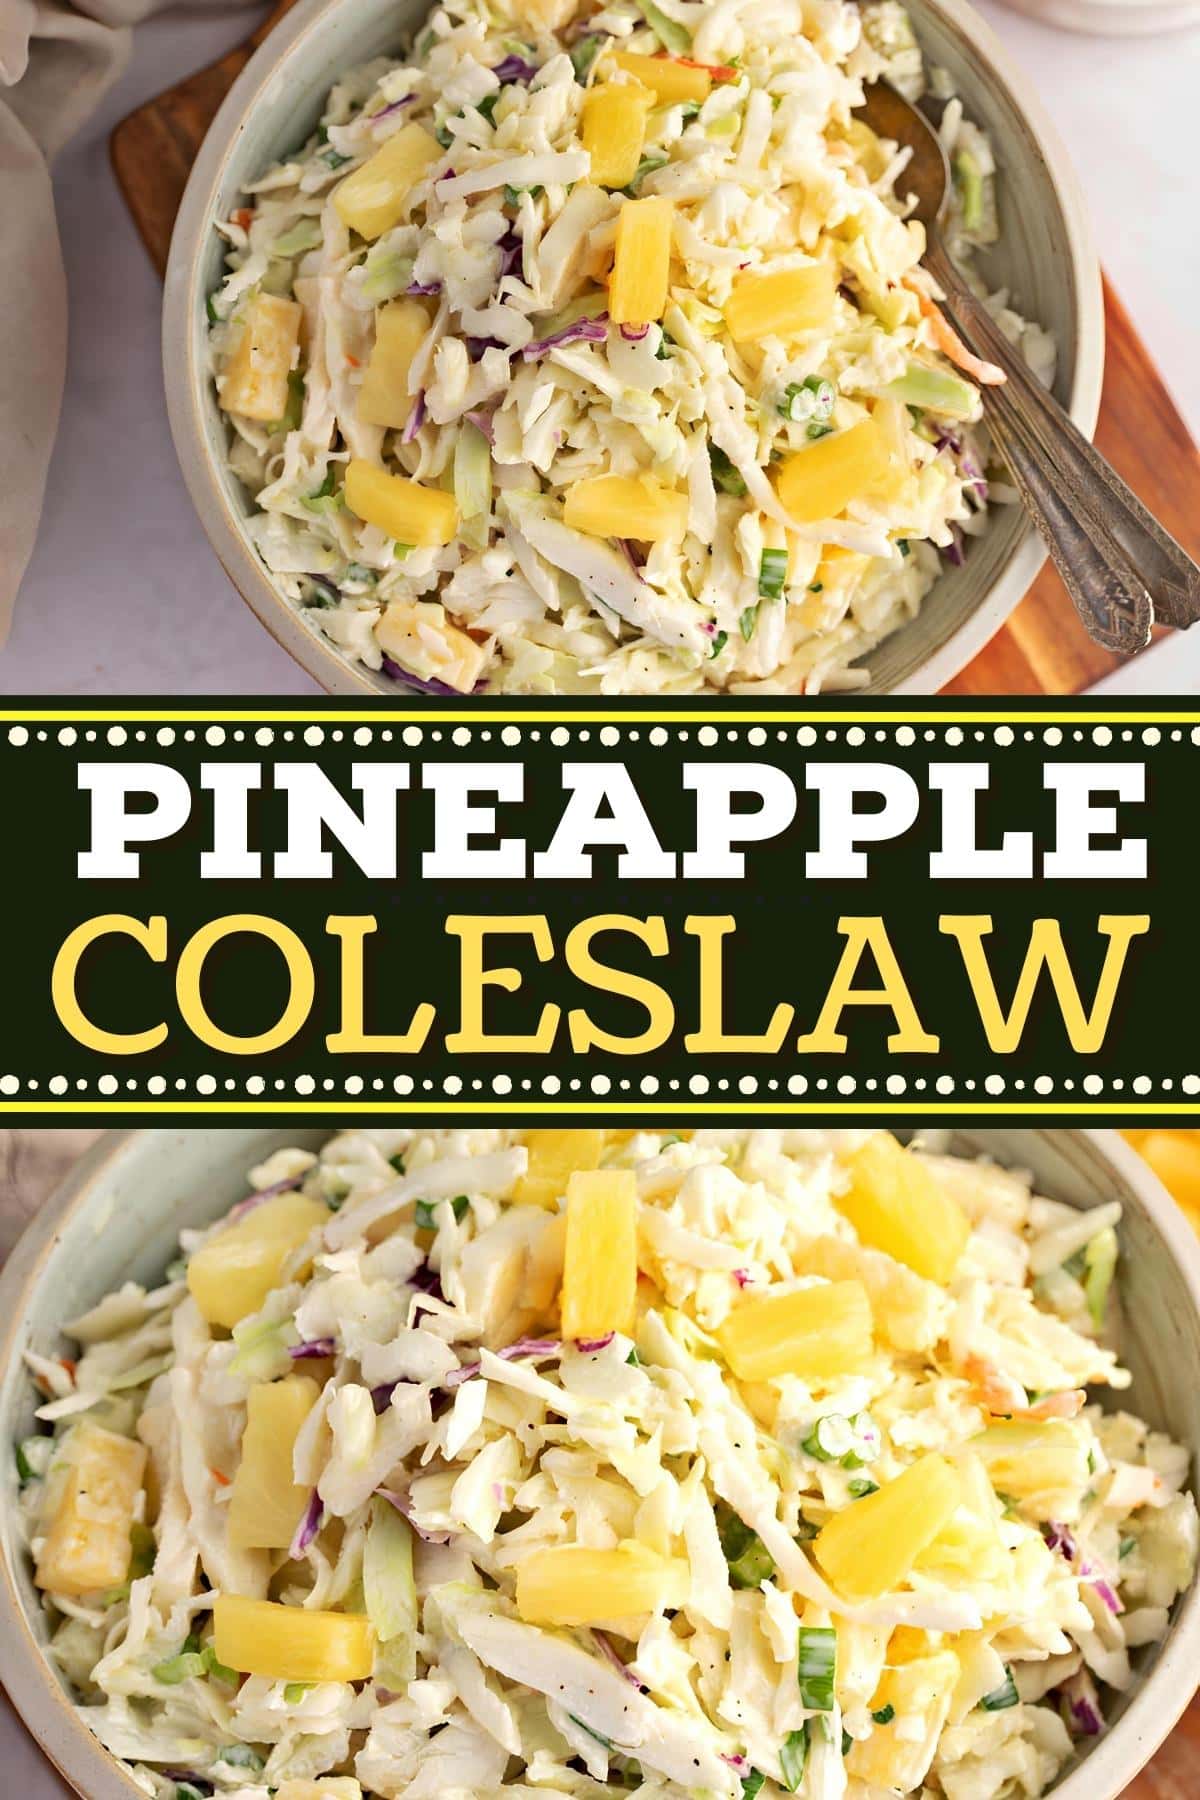 Pineapple Coleslaw